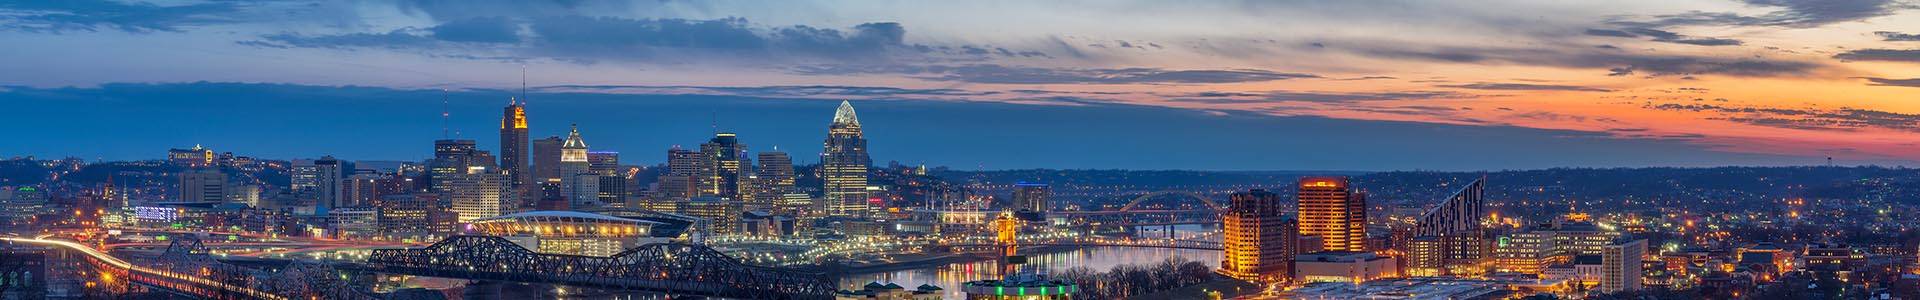 IRR-Cincinnati/Dayton Career Opportunities
